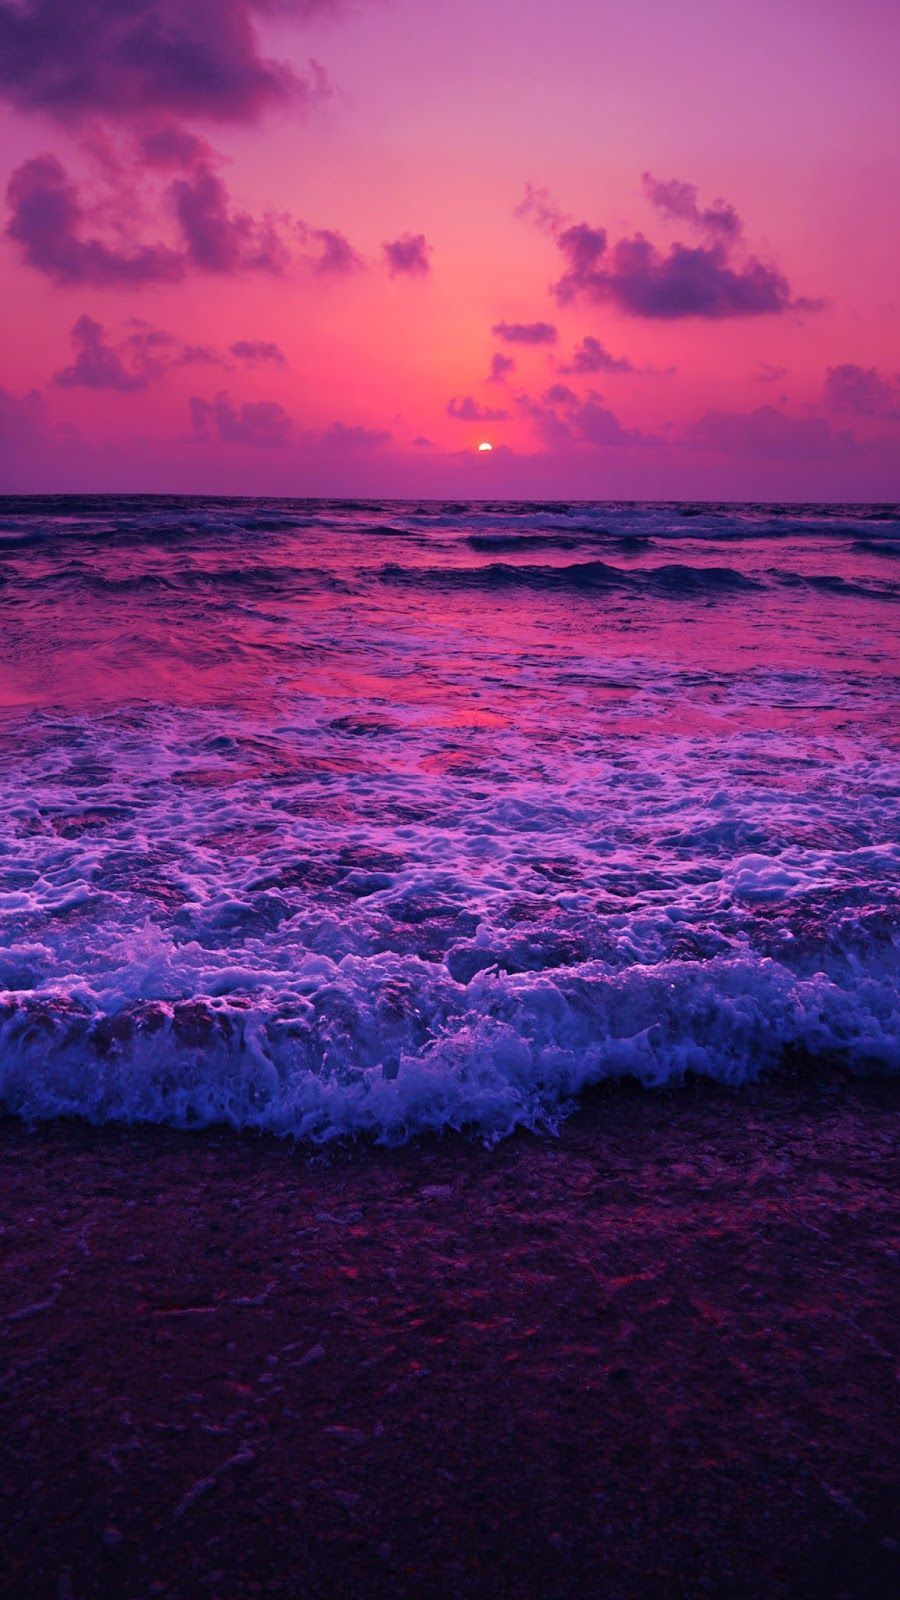 Beach in the twilight sunset